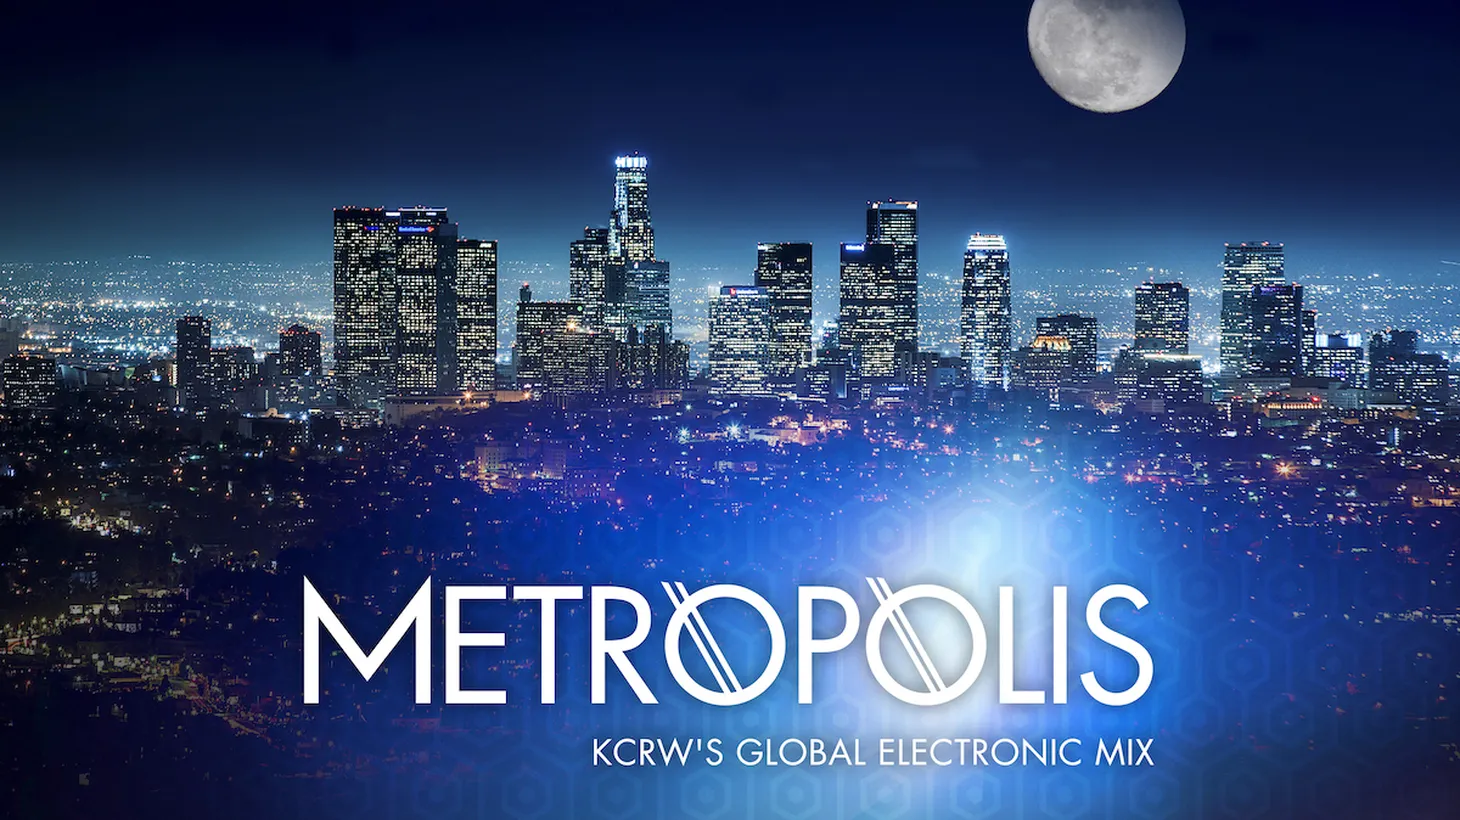 Metropolis playlist, October 2, 2021.